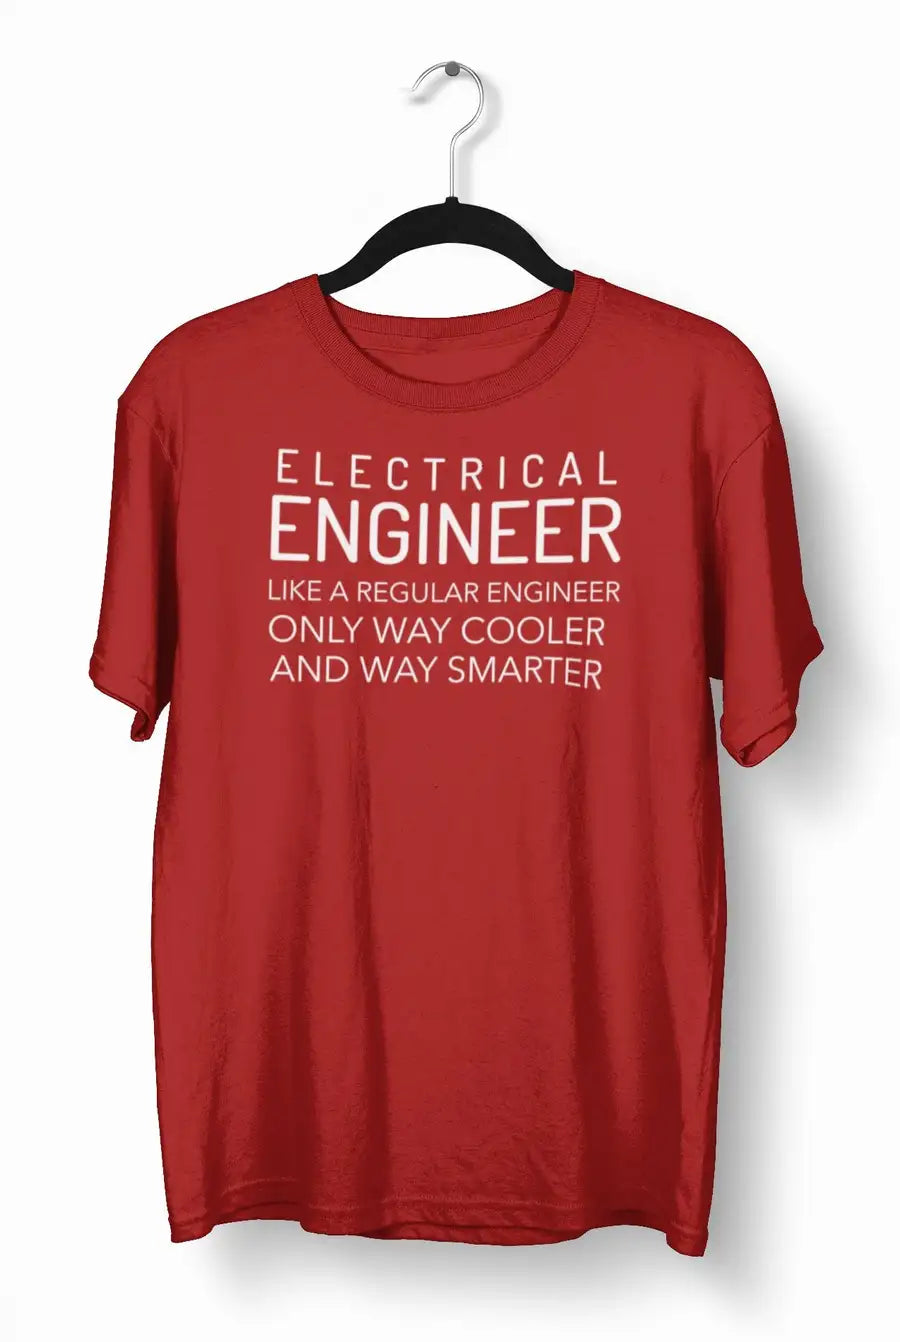 Electrical Engineer T Shirt for Men | Premium Design | Catch My Drift India - Catch My Drift India Clothing black, clothing, engineer, engineering, made in india, multi colour, shirt, t shirt